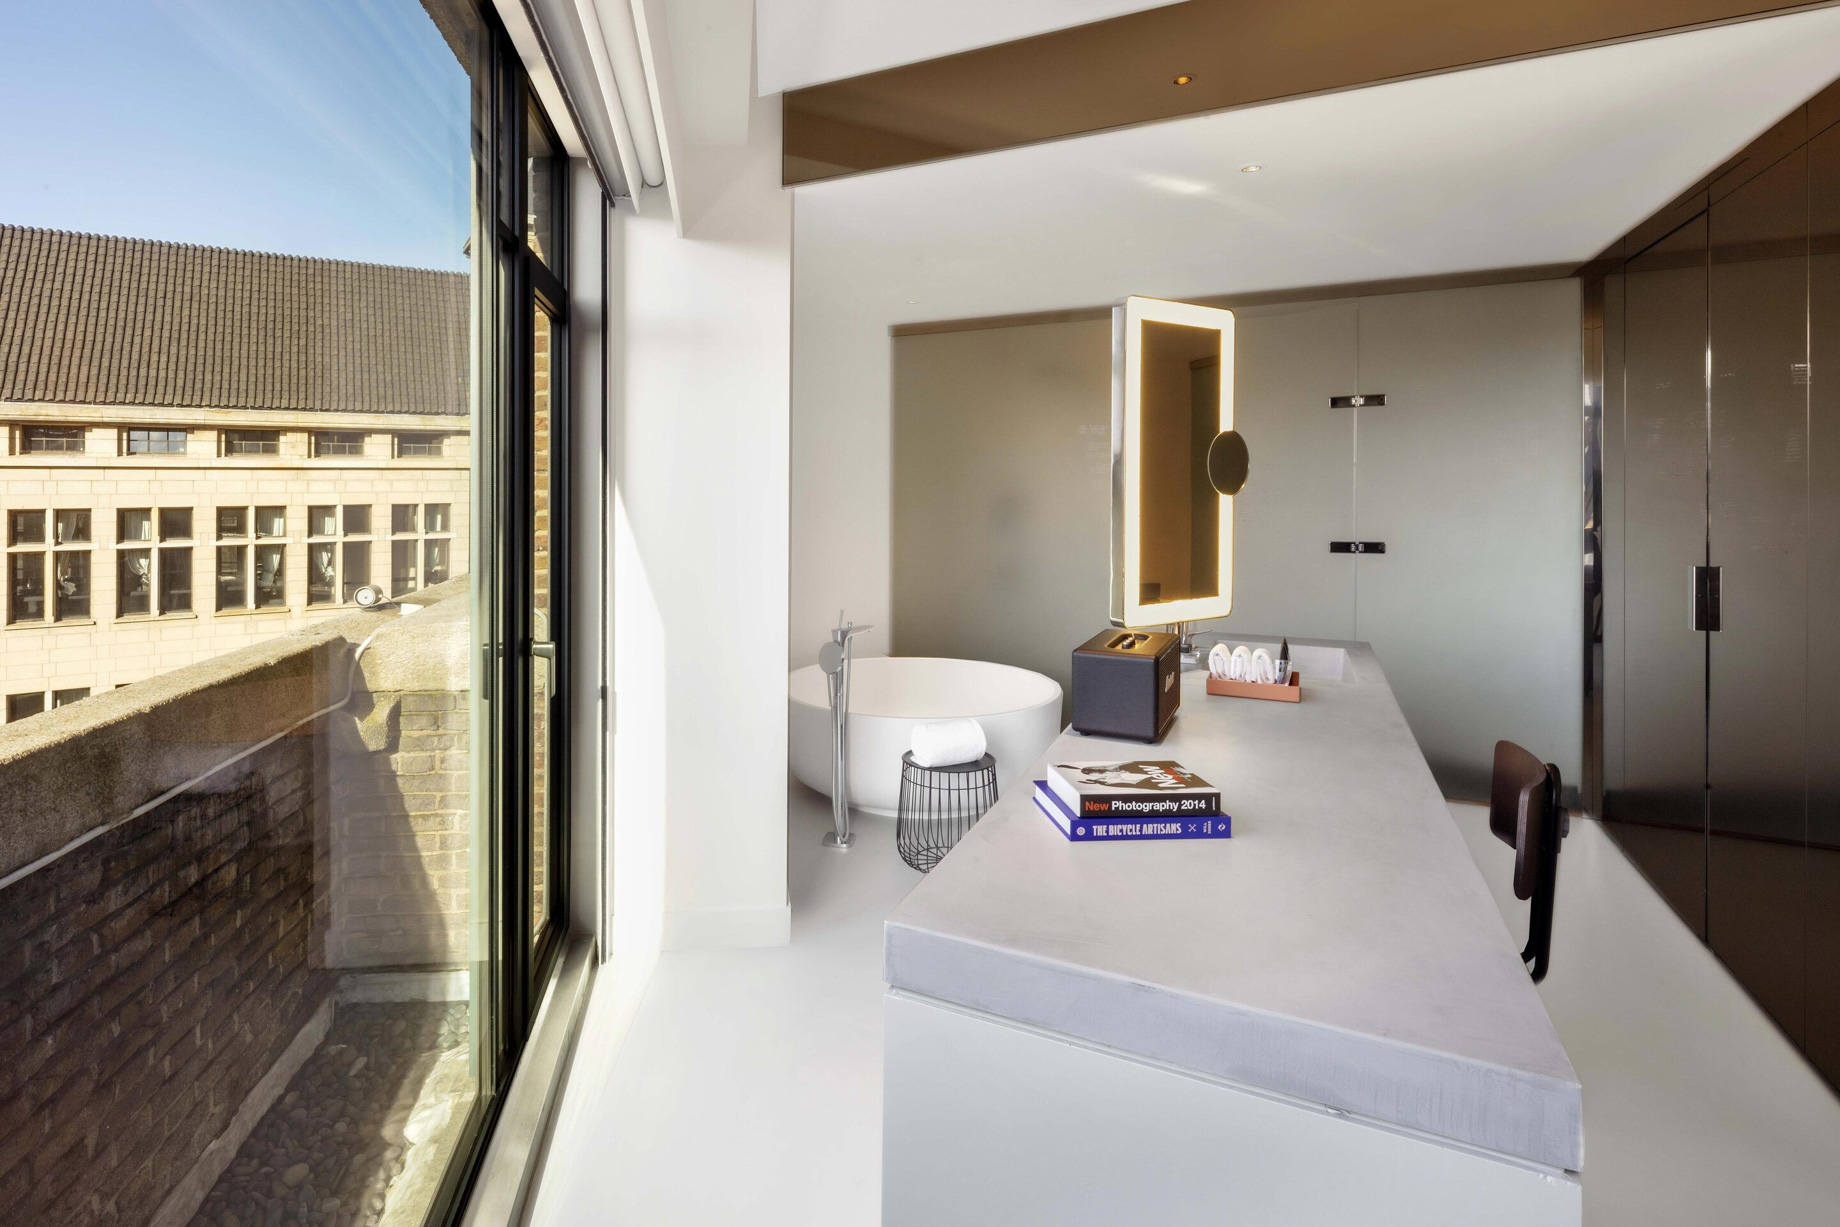 W Amsterdam Hotel – Amsterdam, Netherlands – WOW Exchange One Bedroom Studio Suite View